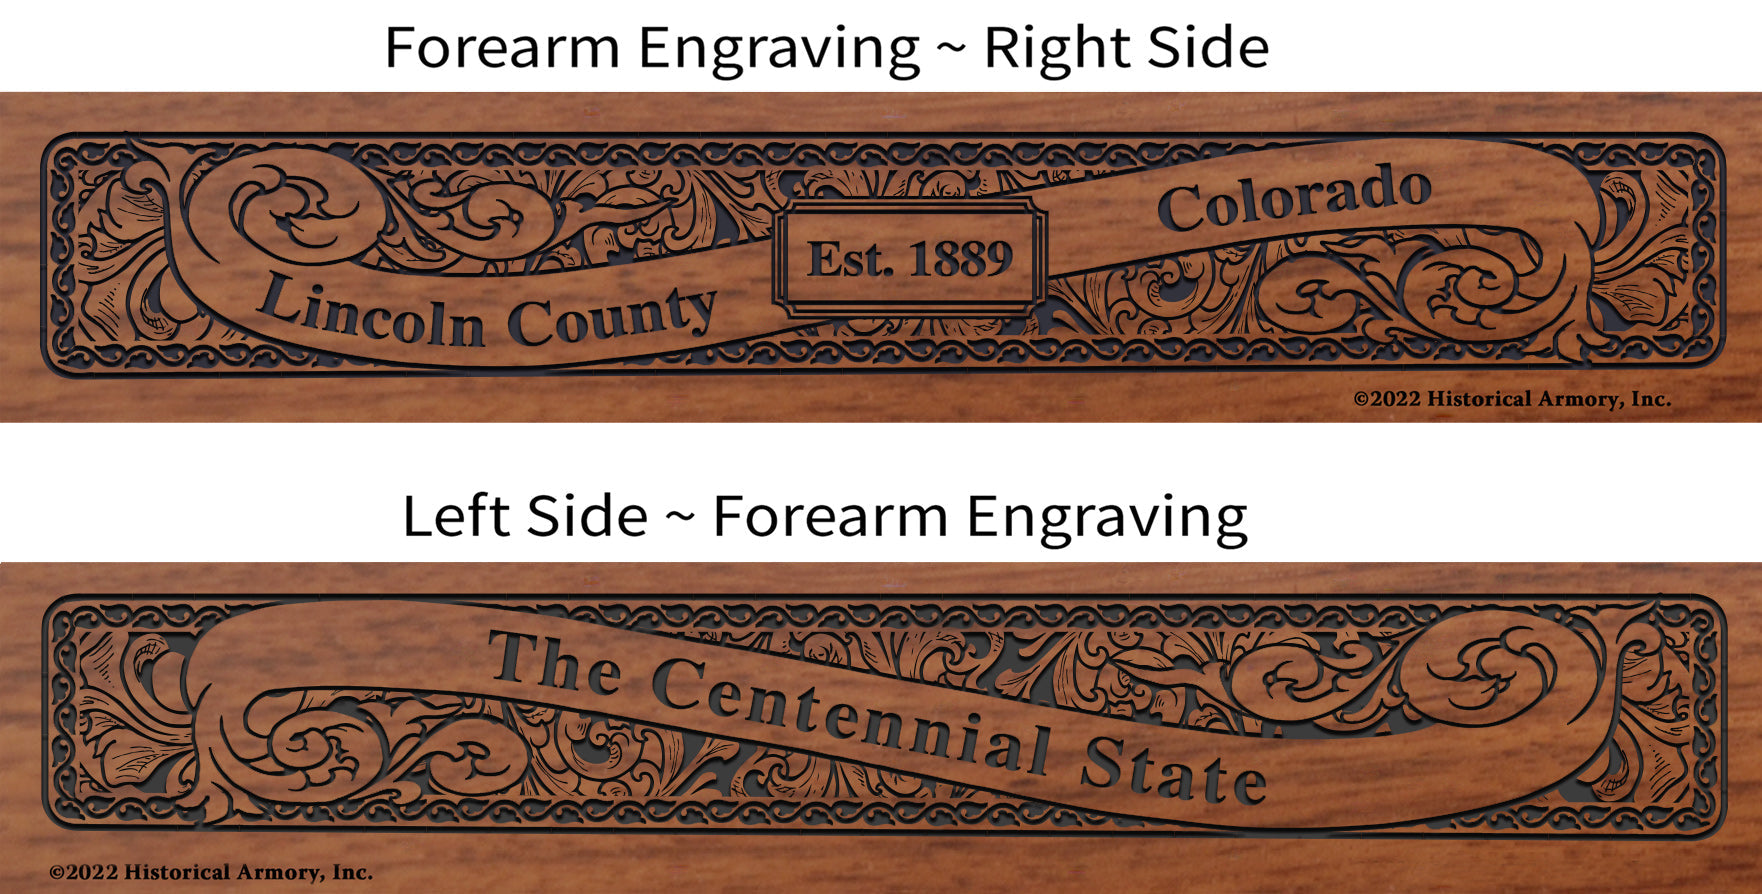 Lincoln County Colorado Engraved Rifle Forearm